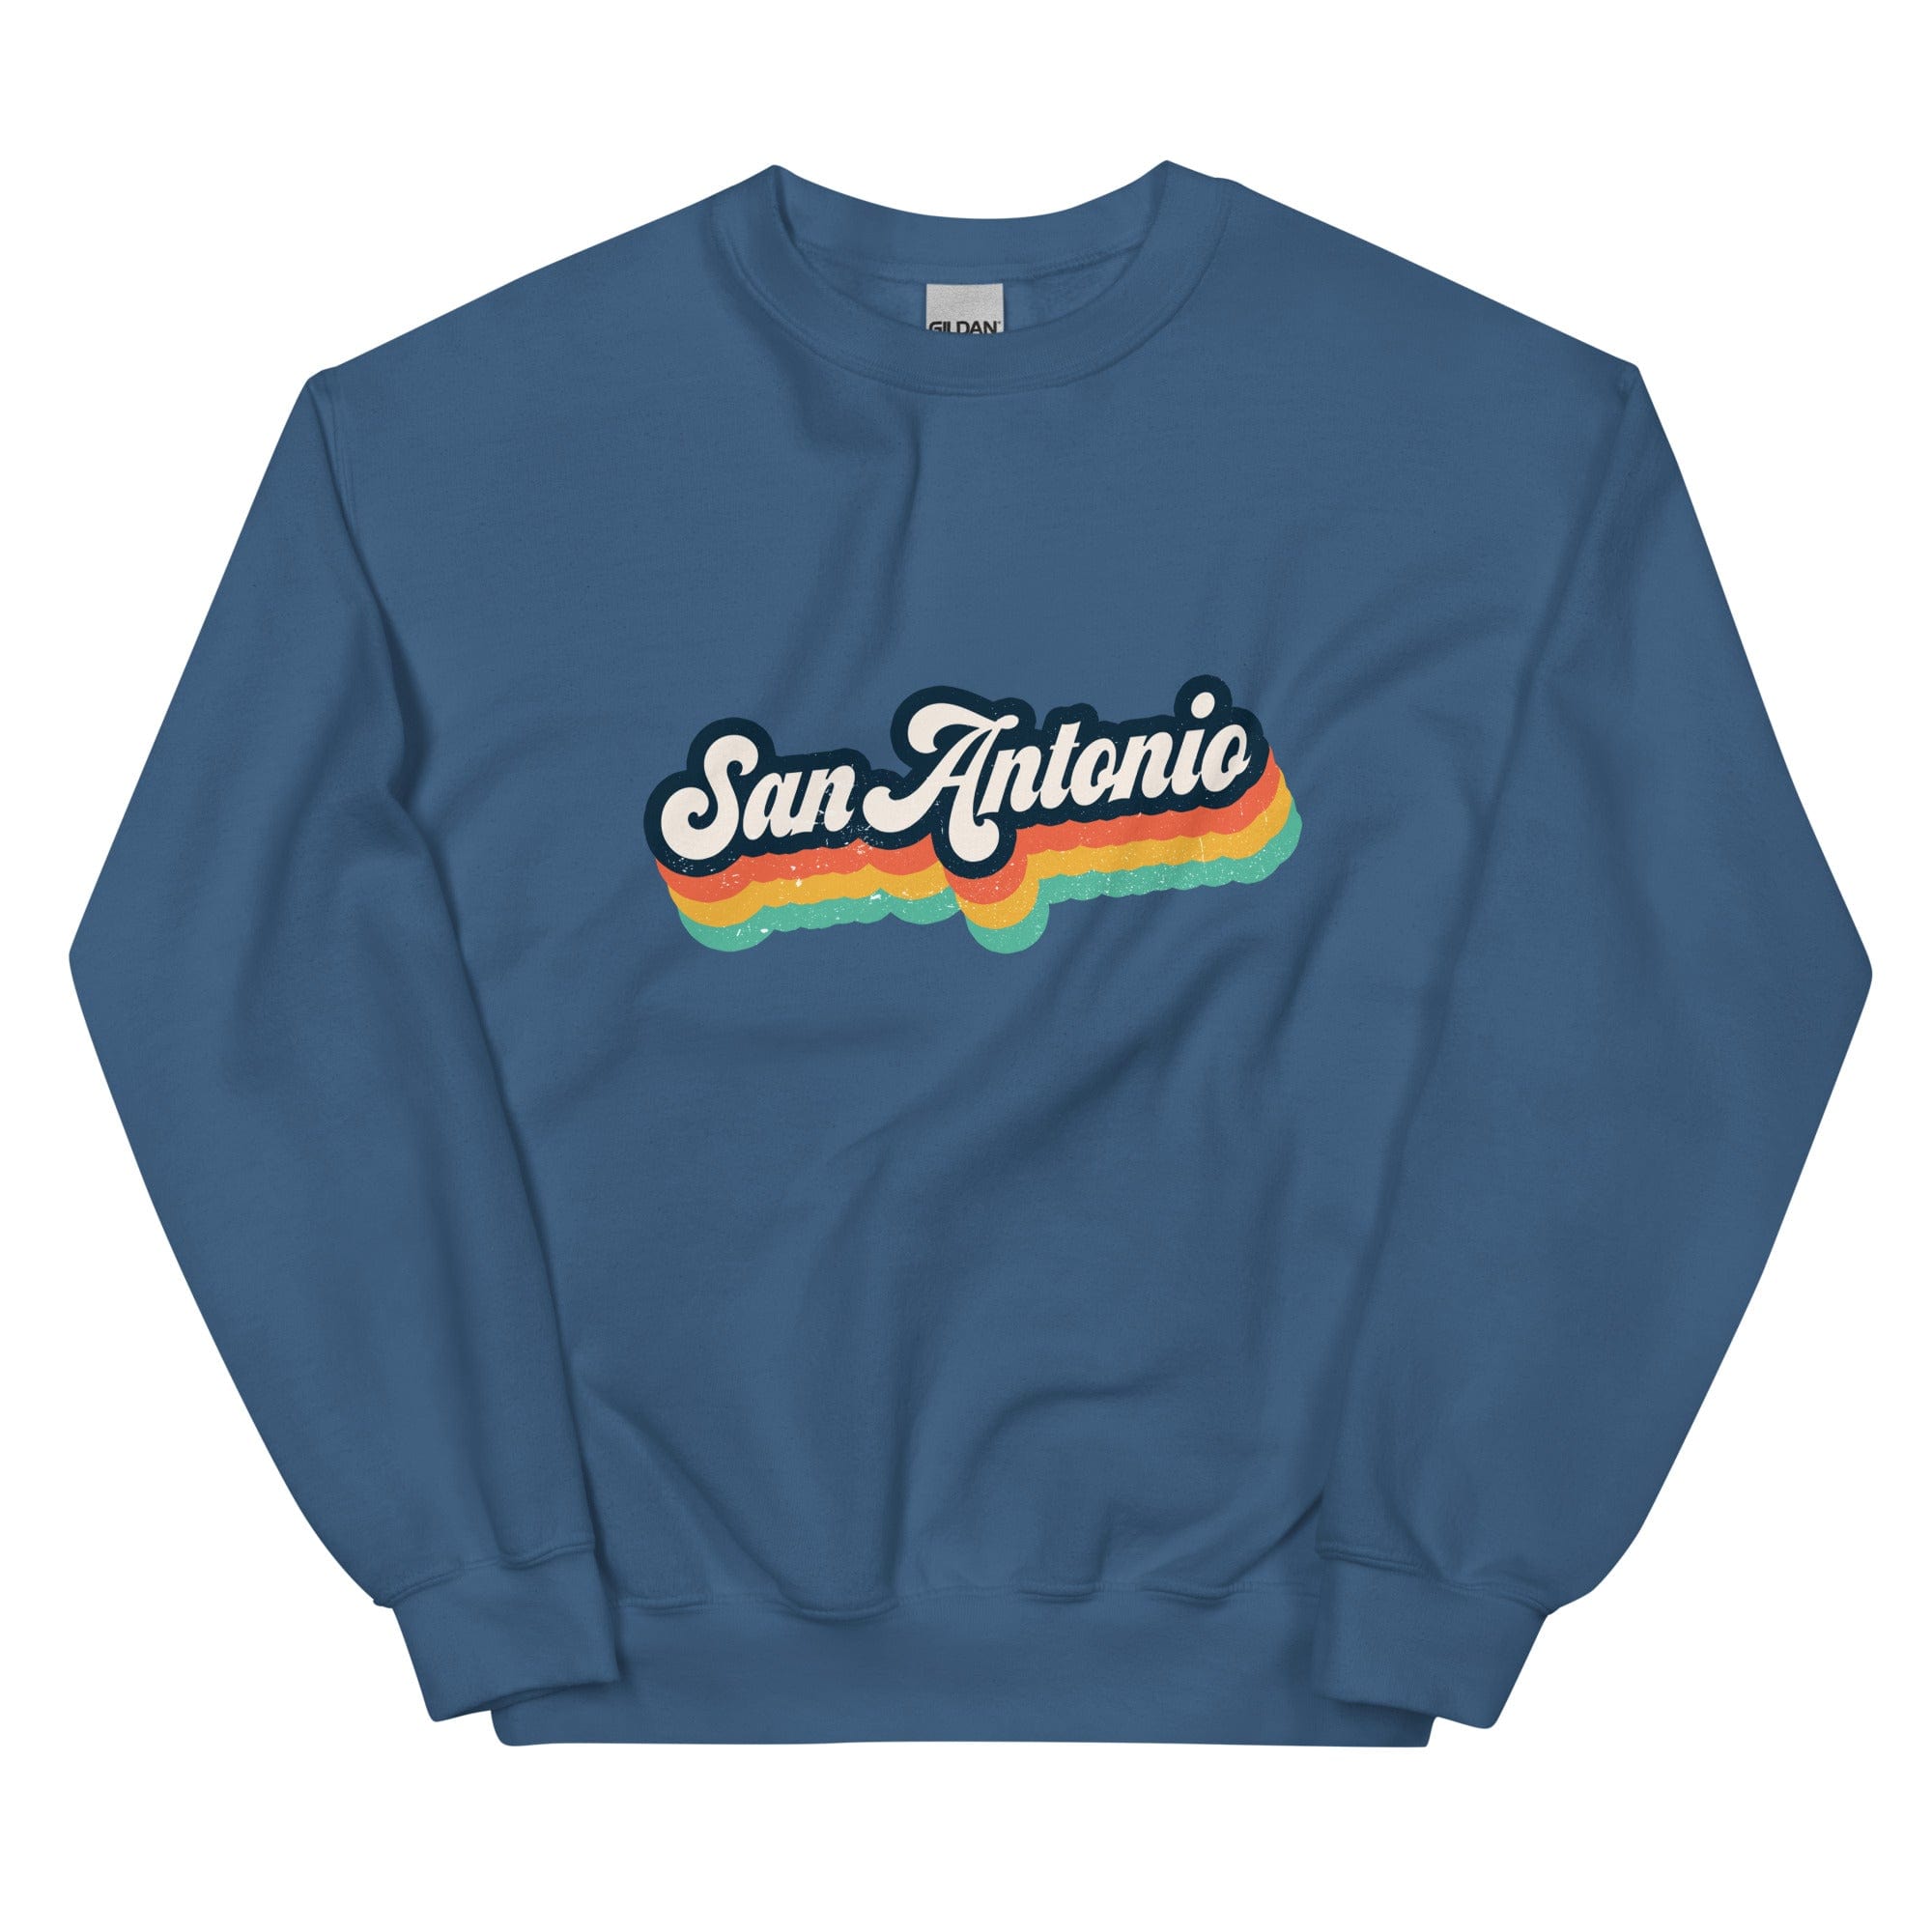 City Shirt Co San Antonio Retro Crewneck Sweatshirt Indigo Blue / S